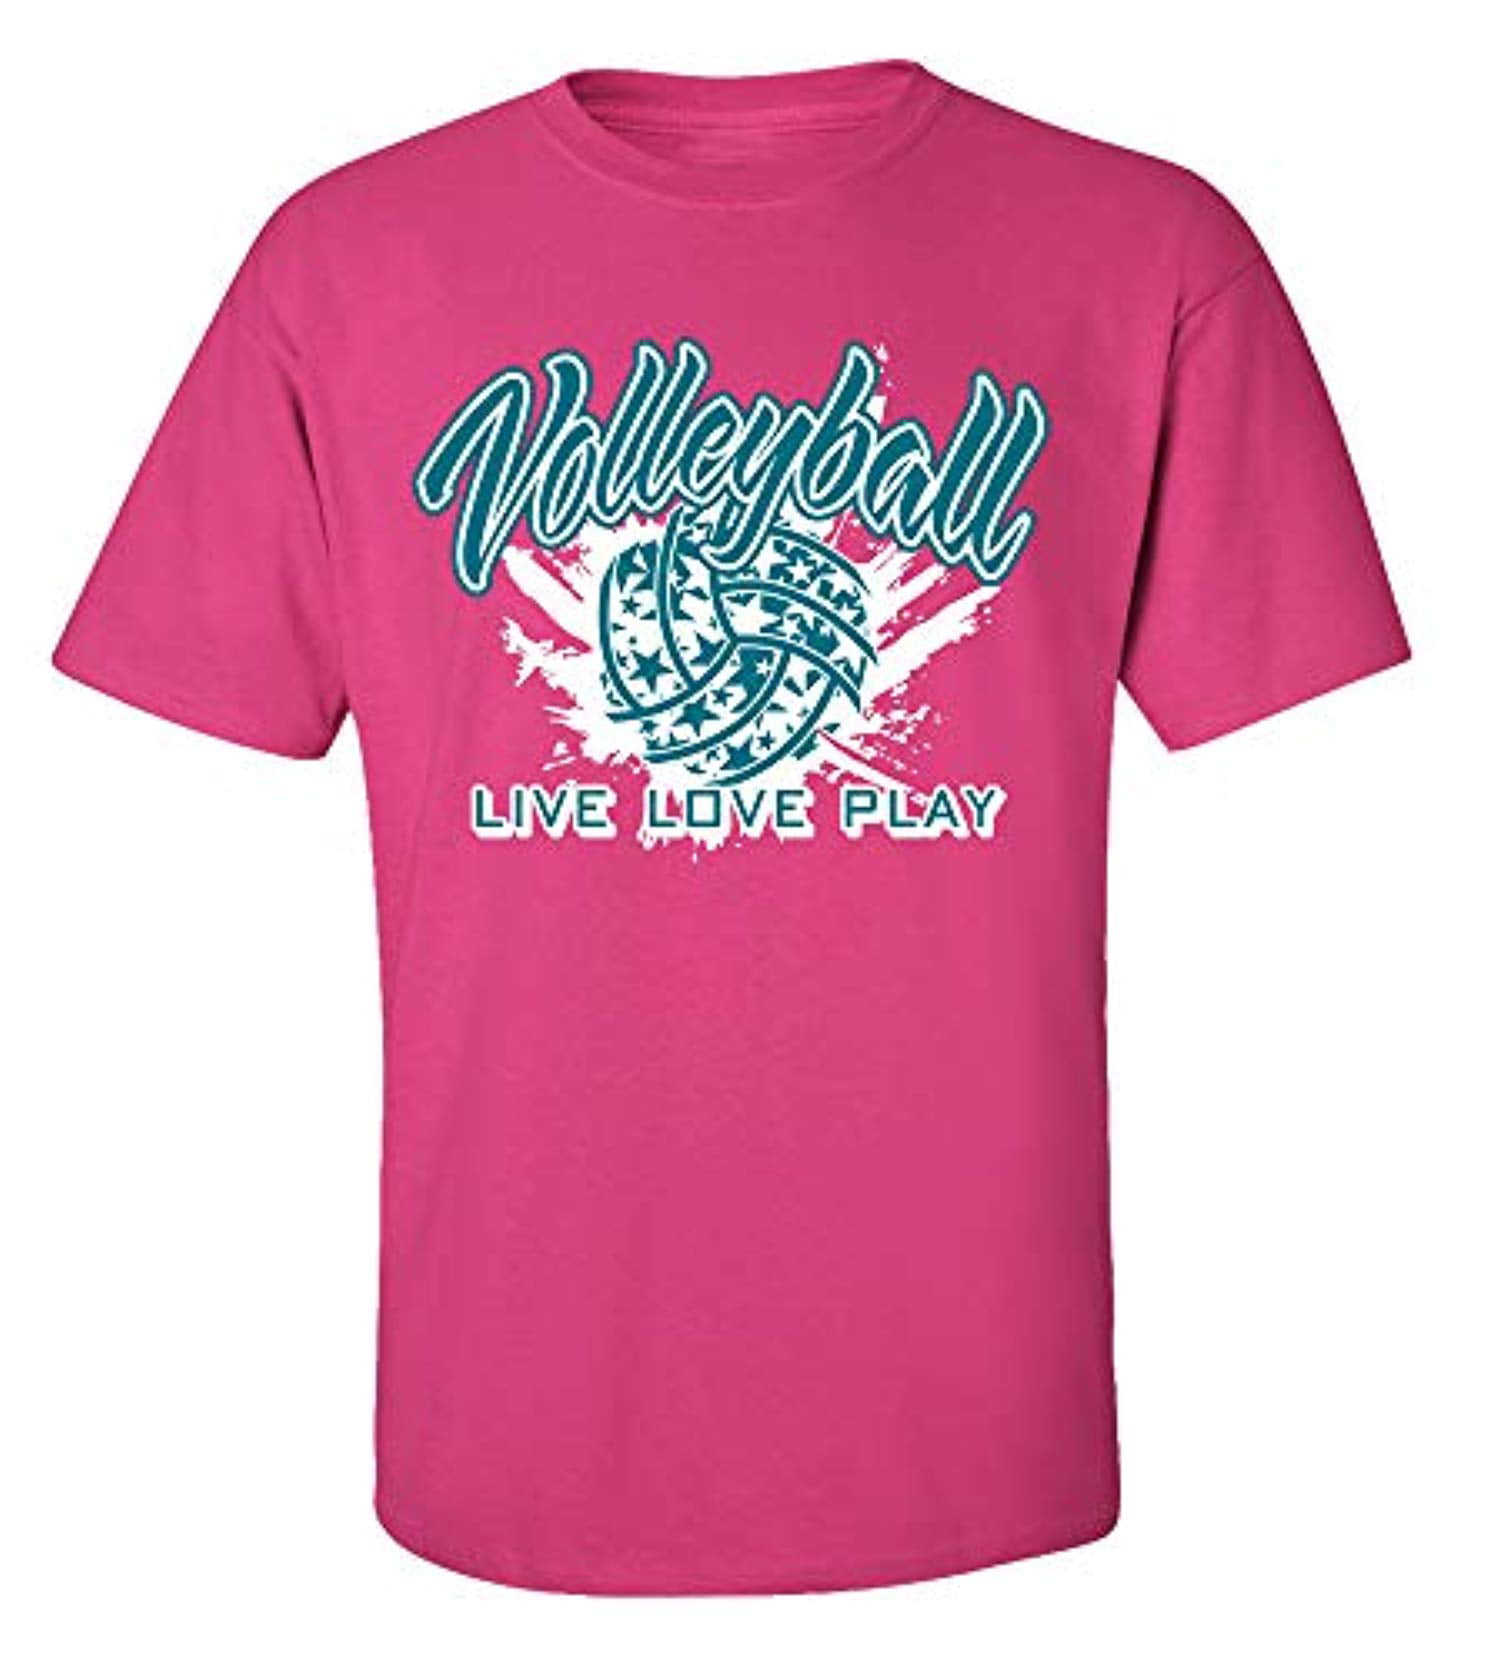 Volleyball Live Love Play Adult Short Sleeve Tee Shirt Black eBay